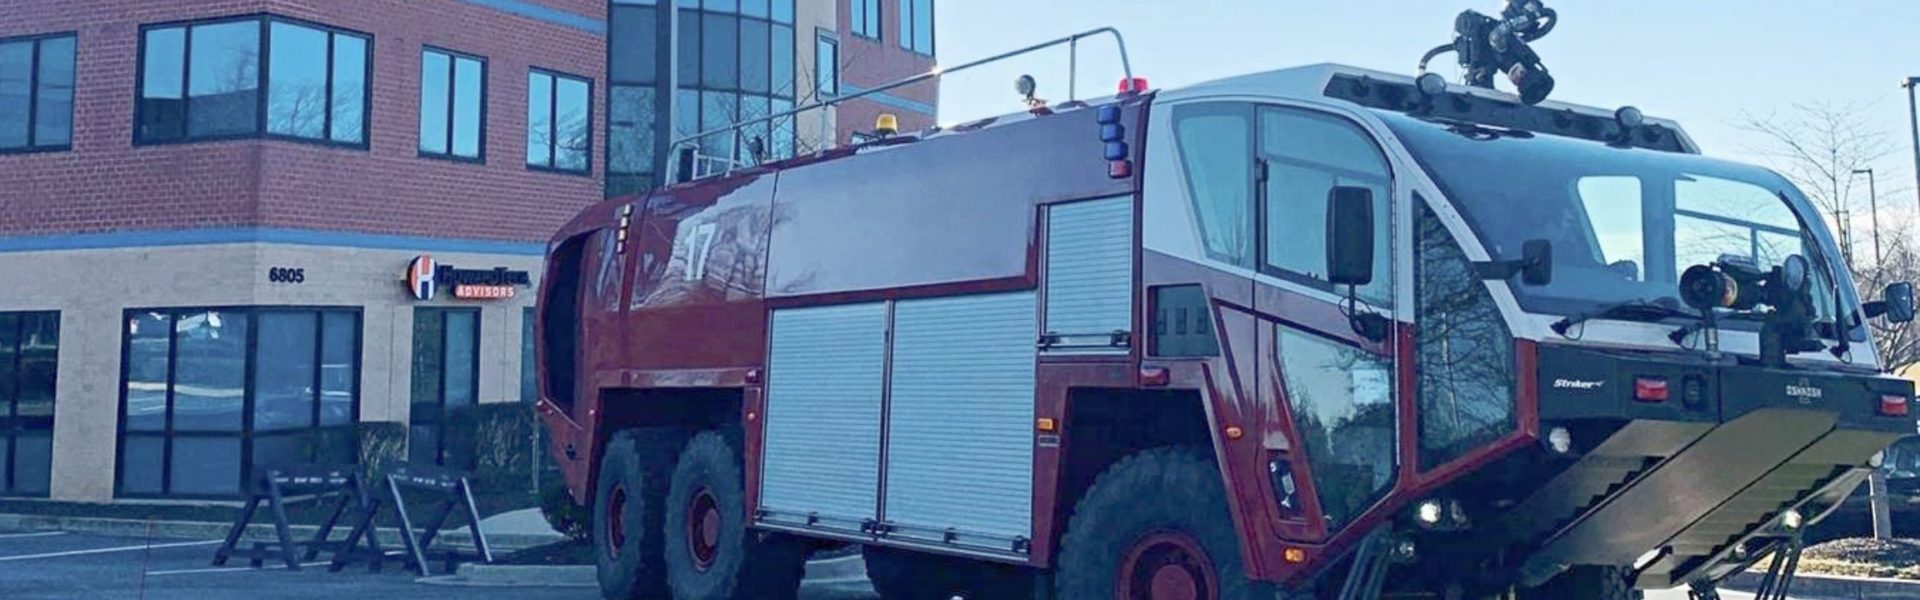 Oversized Fire Truck to Iraq